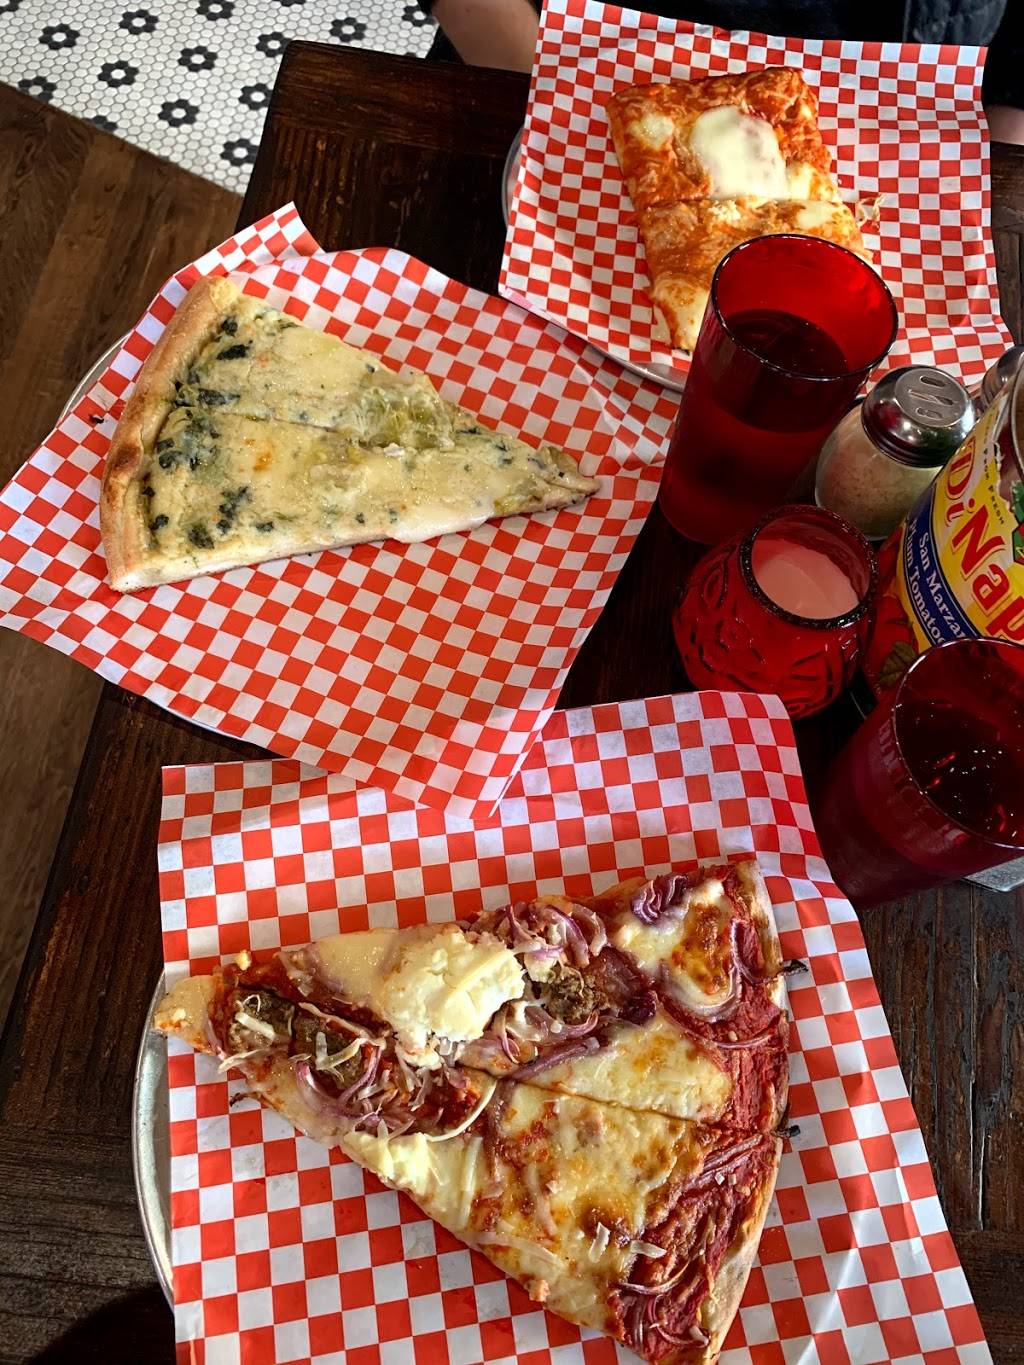 Artichoke Basilles Pizza | 4799 Telegraph Ave, Oakland, CA 94609, USA | Phone: (510) 844-4887